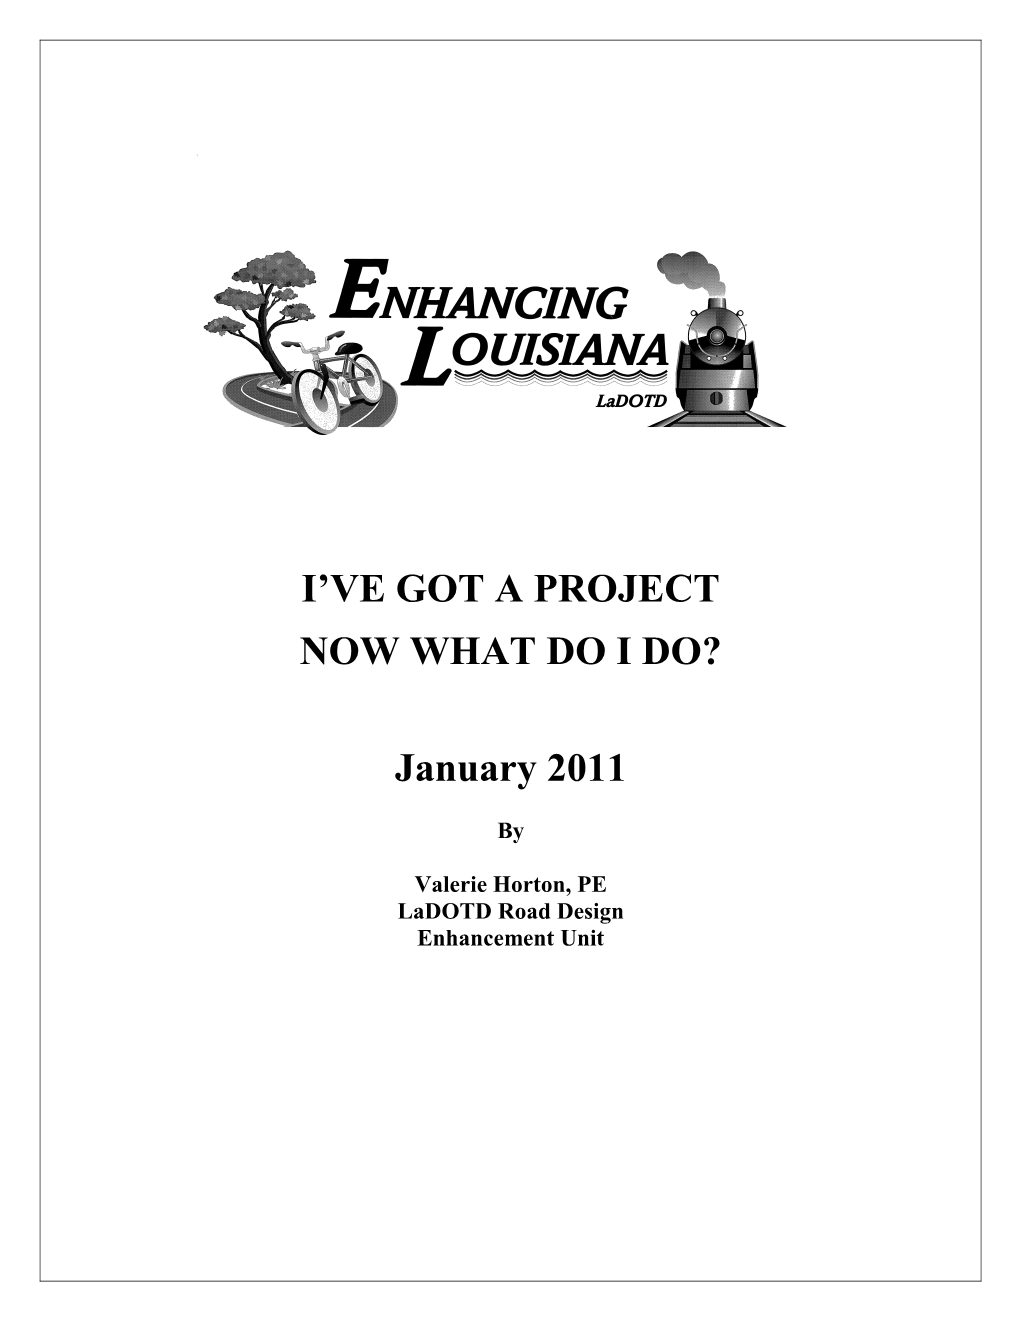 Louisiana Department of Transportation and Development